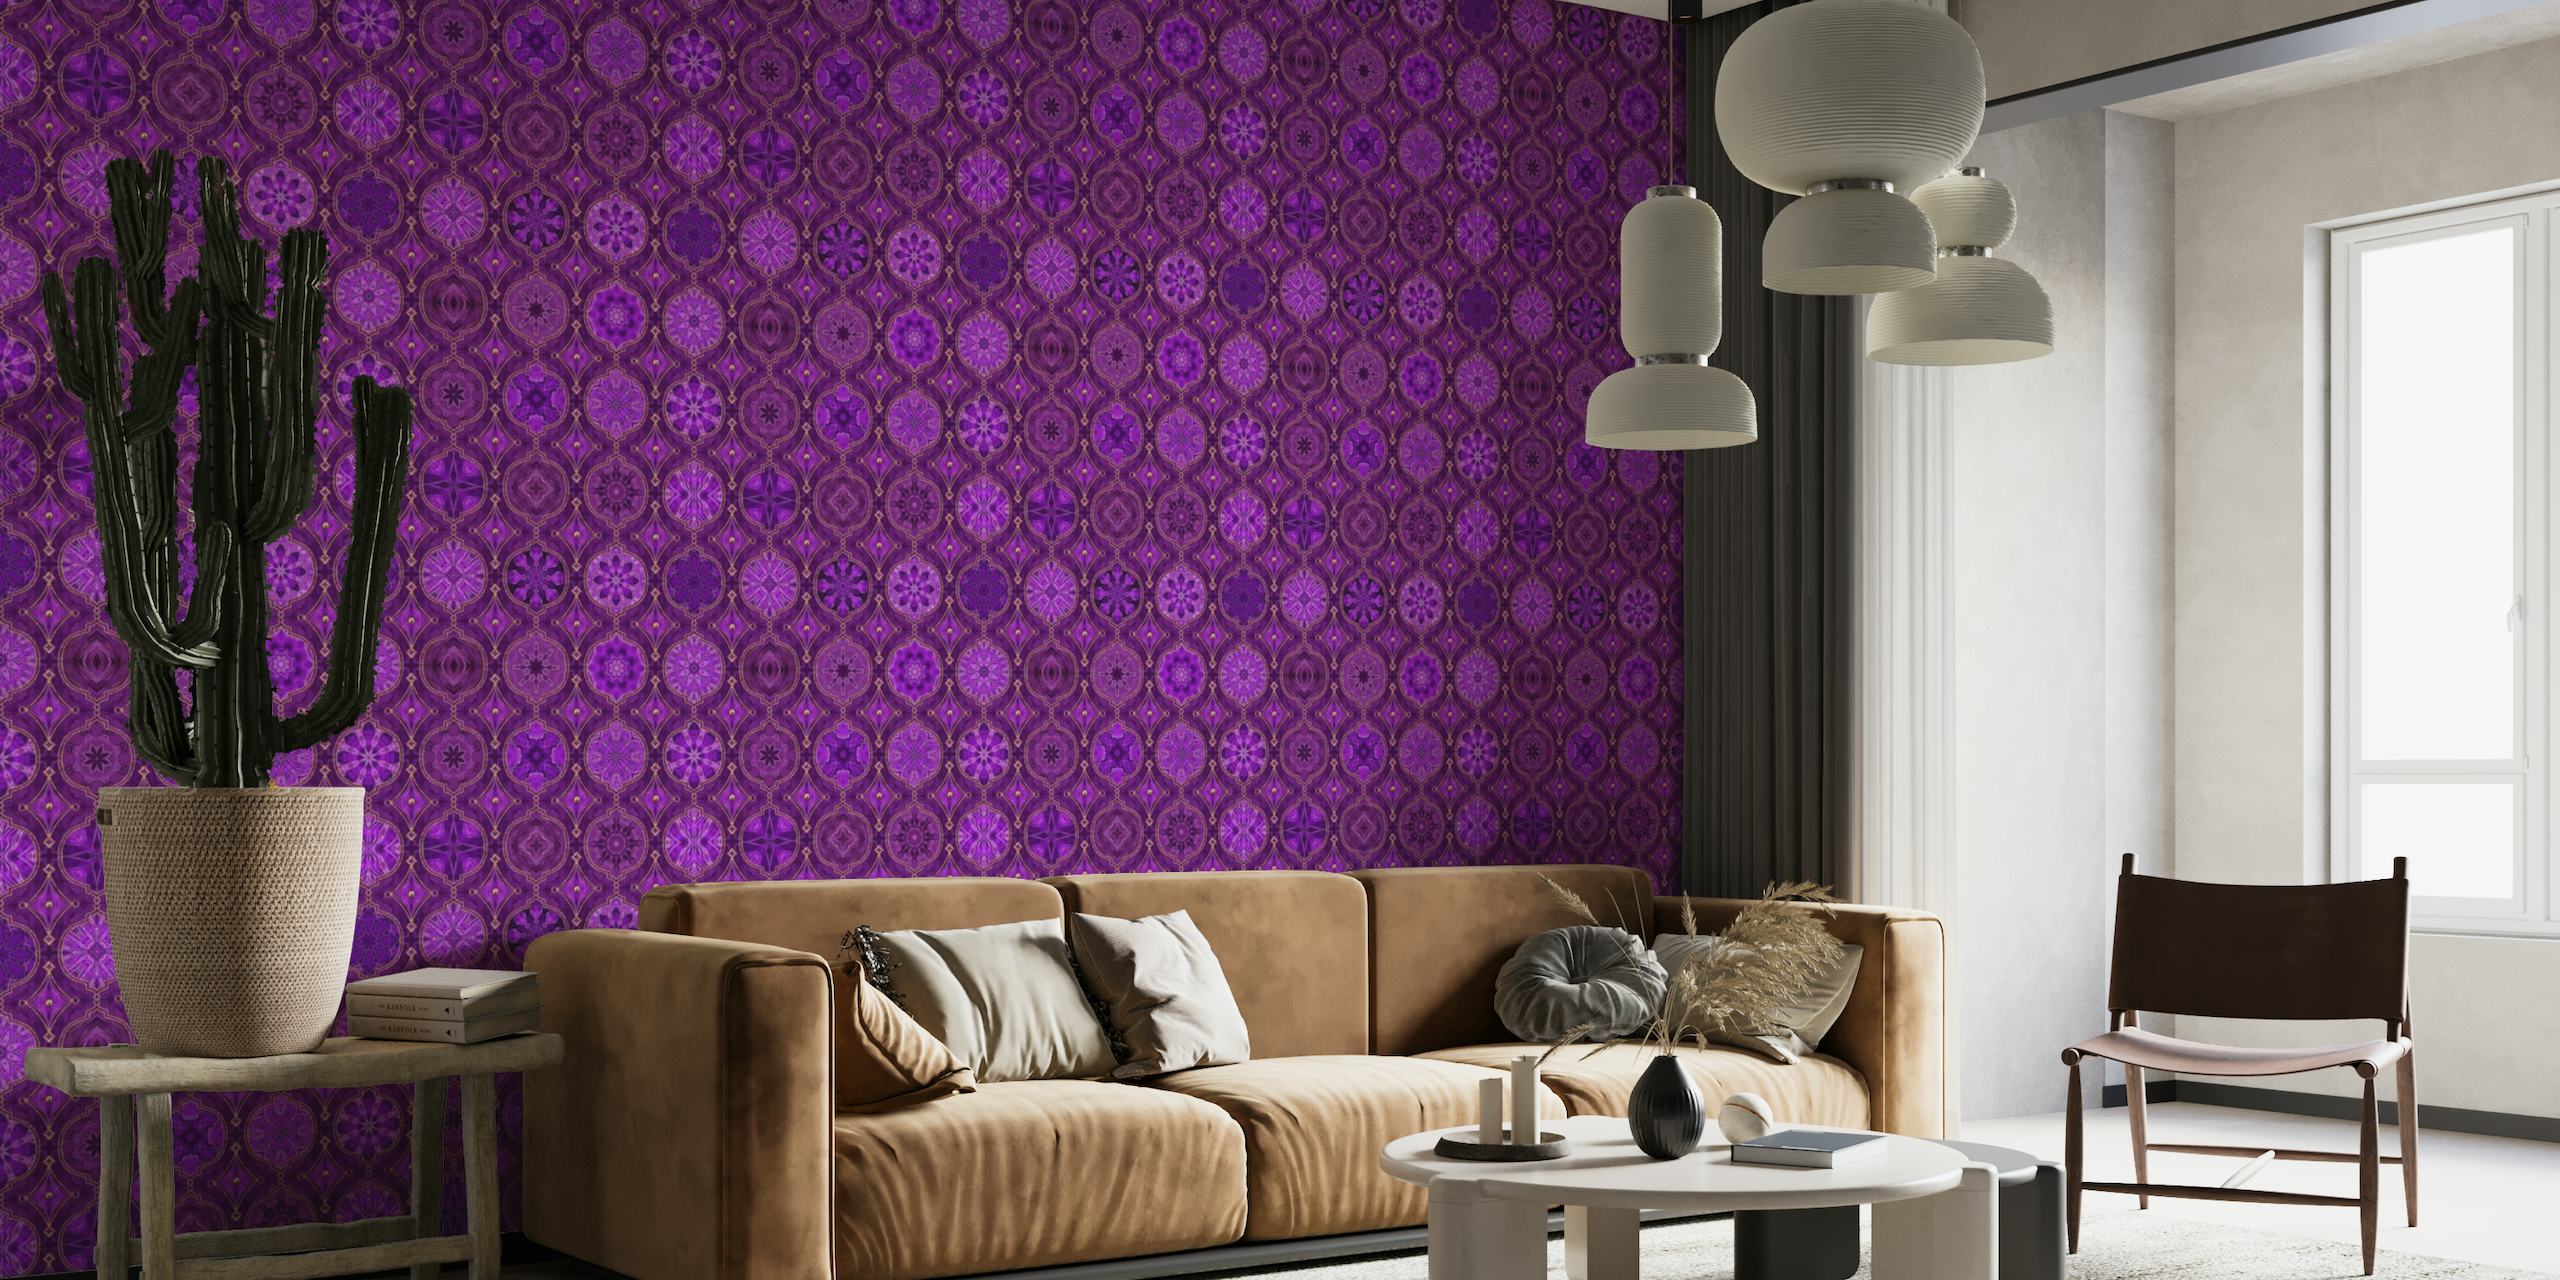 Treasures of Morocco Oriental Tile Design Fuchsia Purple Gold papiers peint